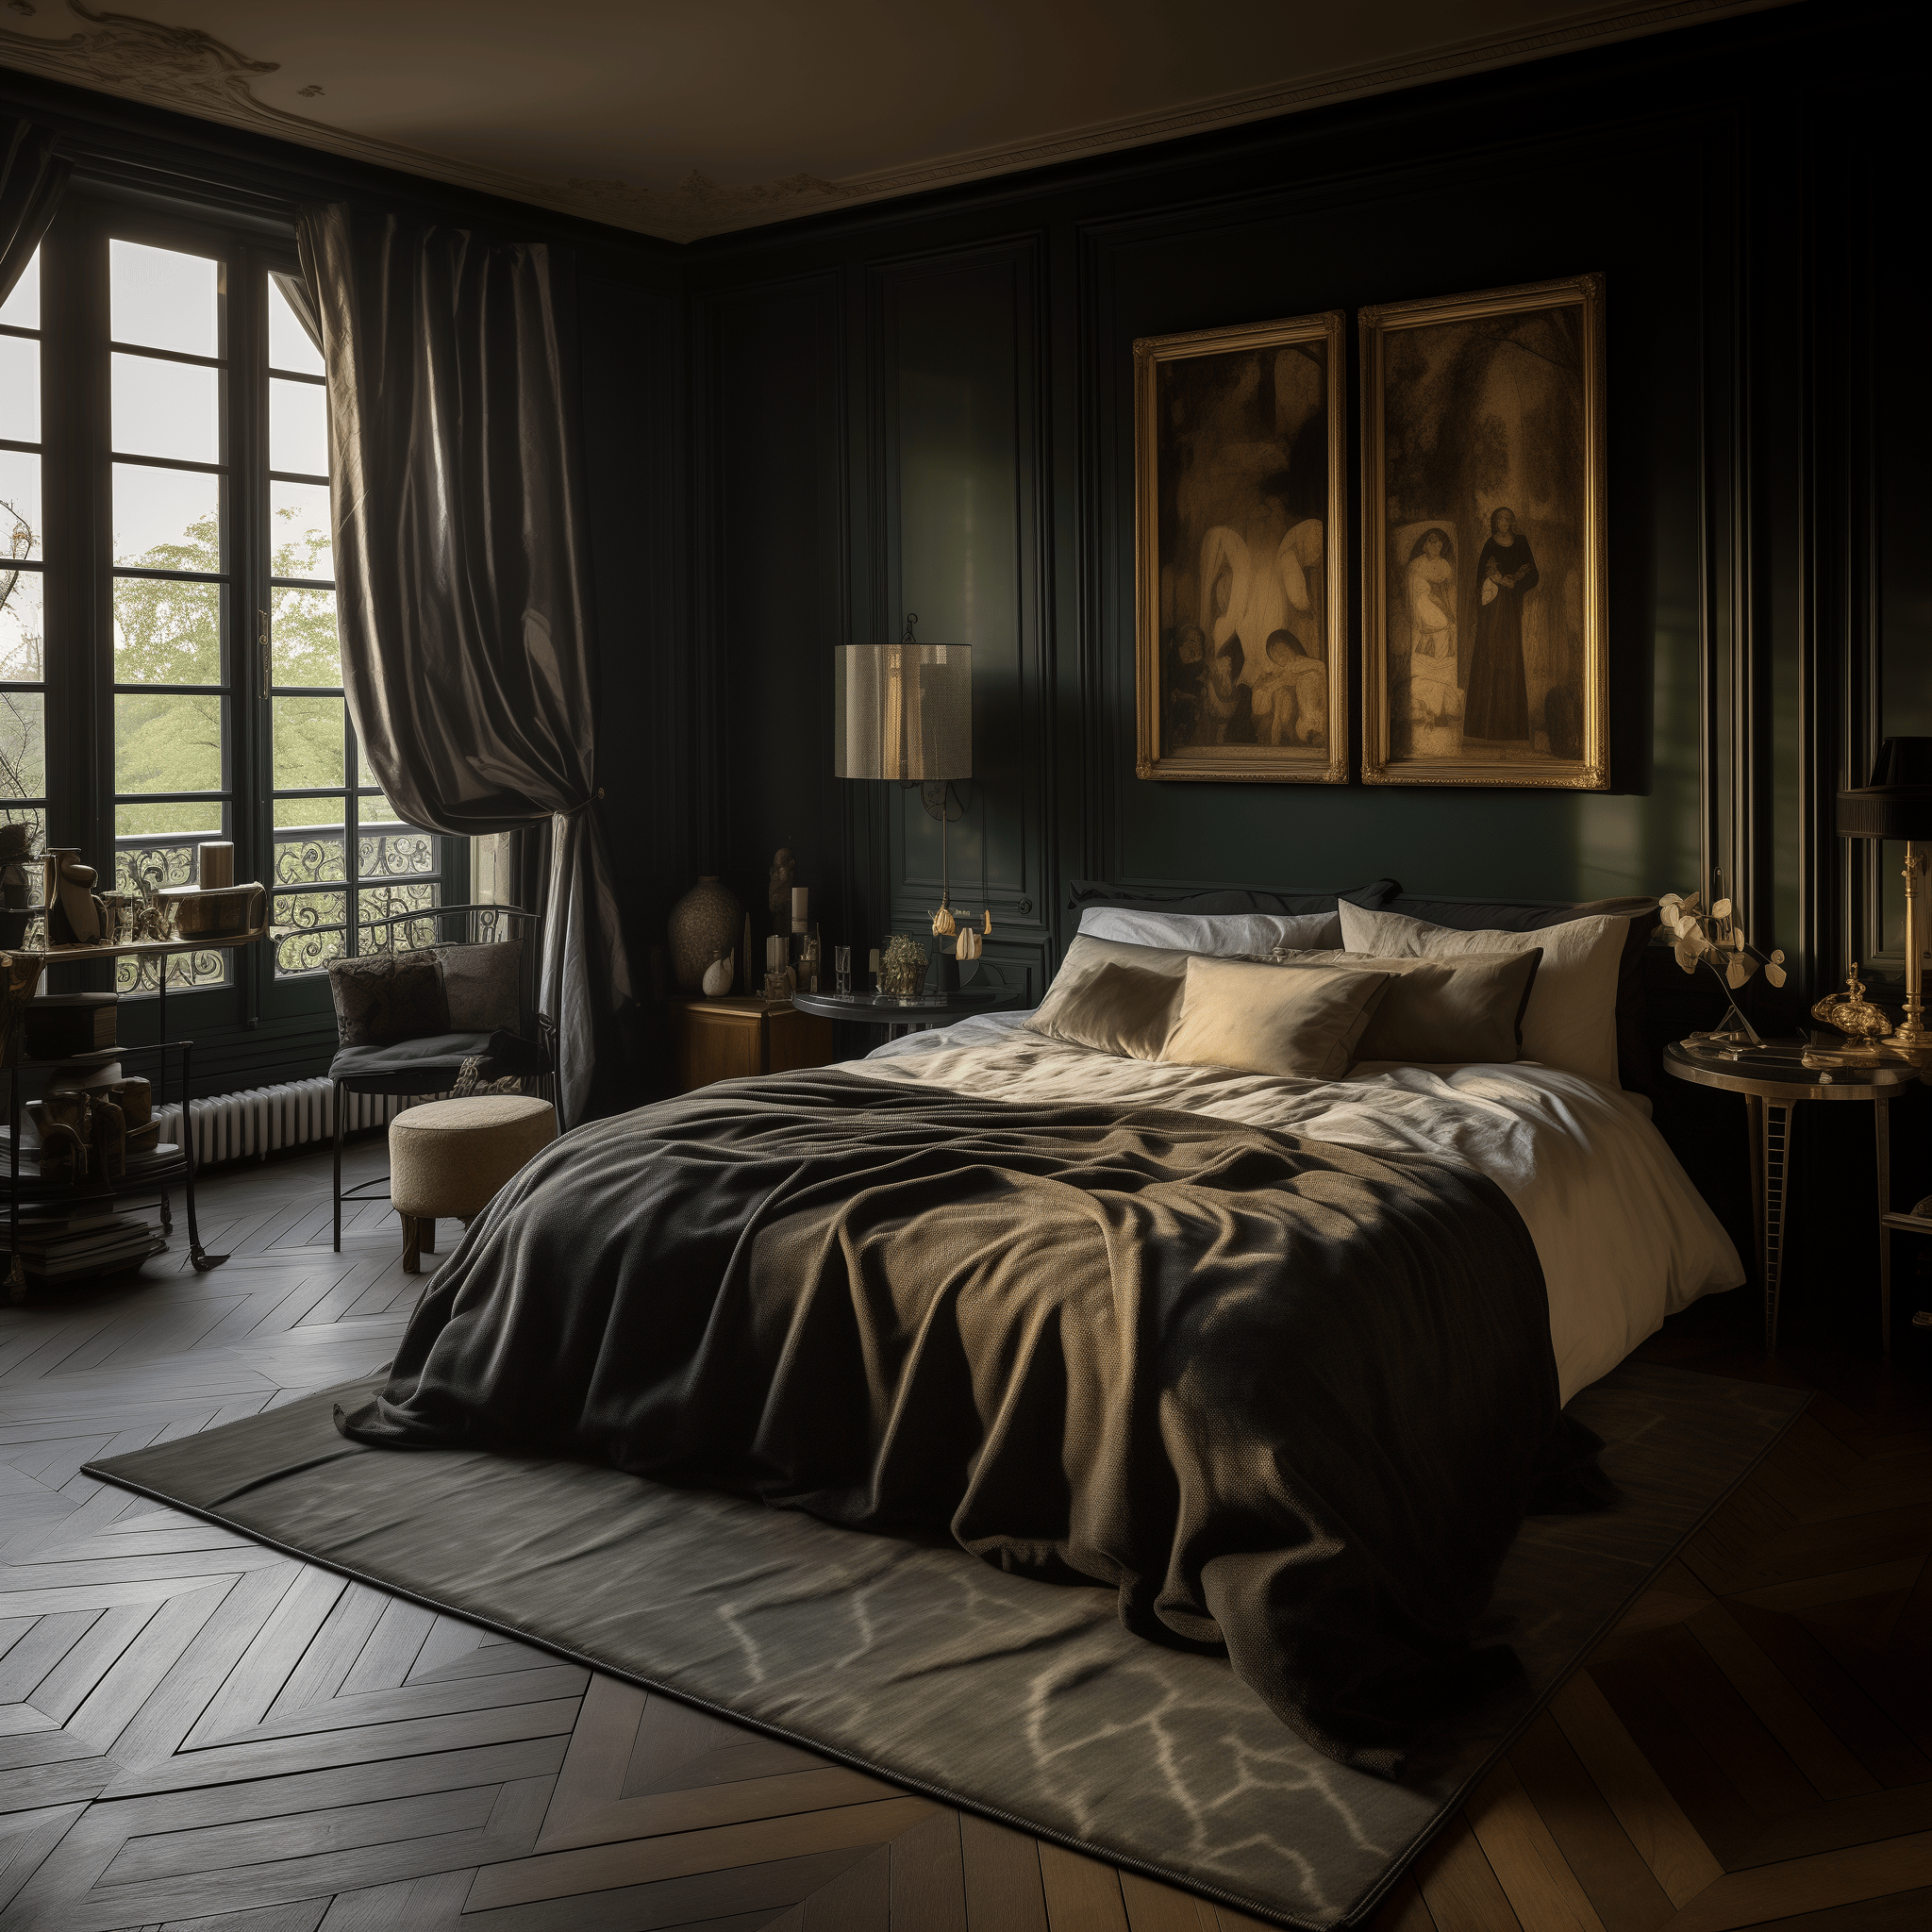 dark bedroom aesthetic decor design ideas luxury cozy colors